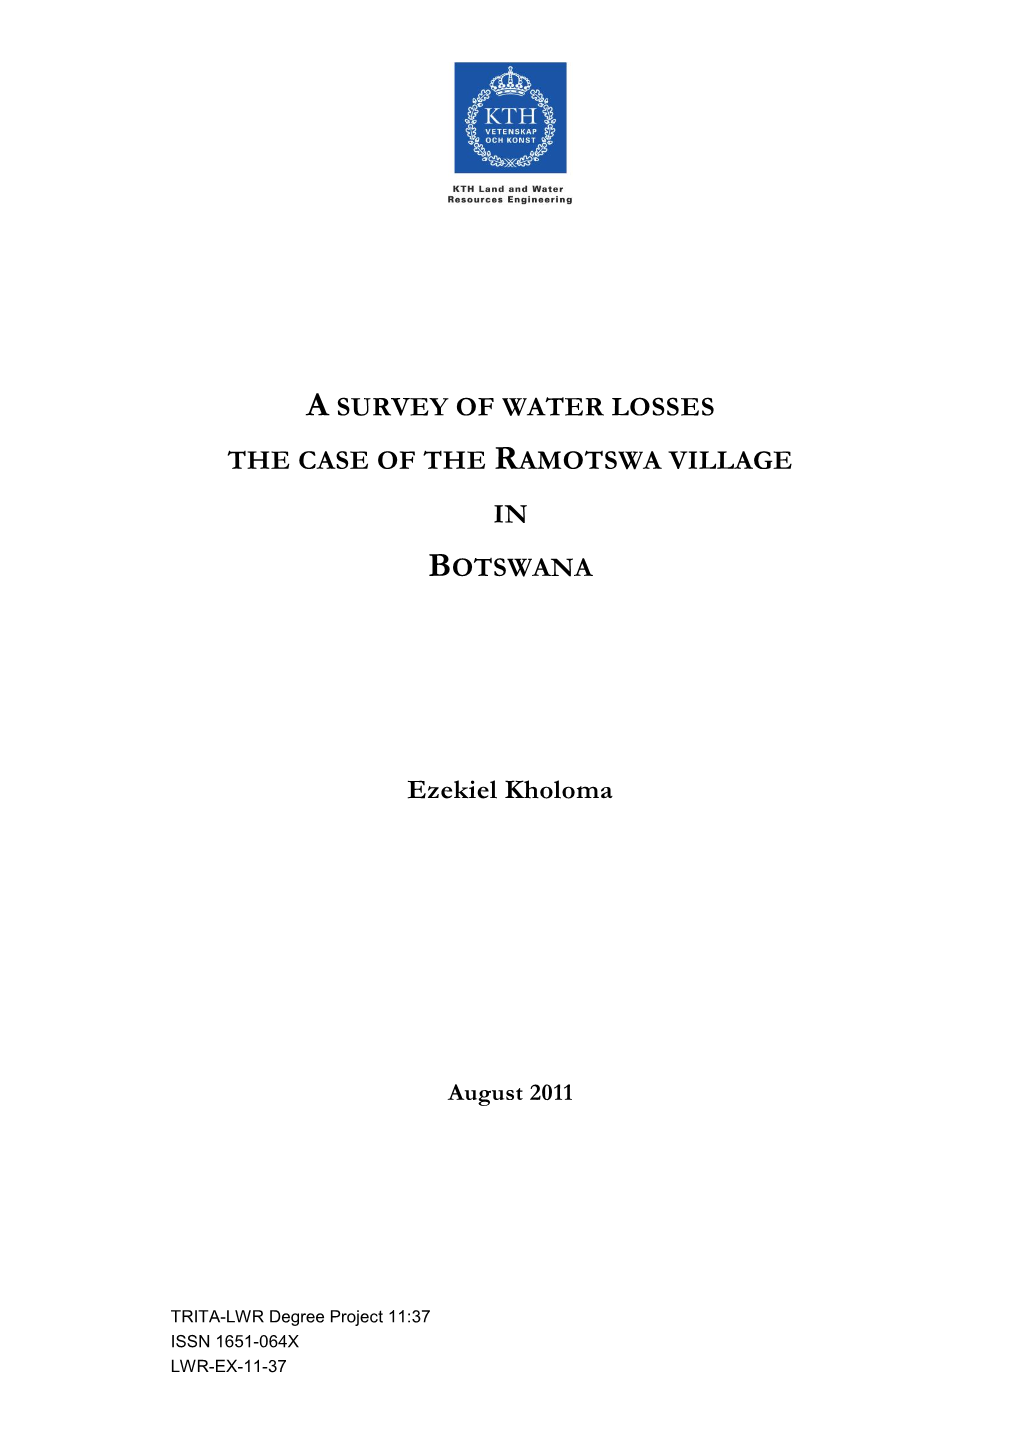 A Survey of Water Loss in Ramotswa, Botswana